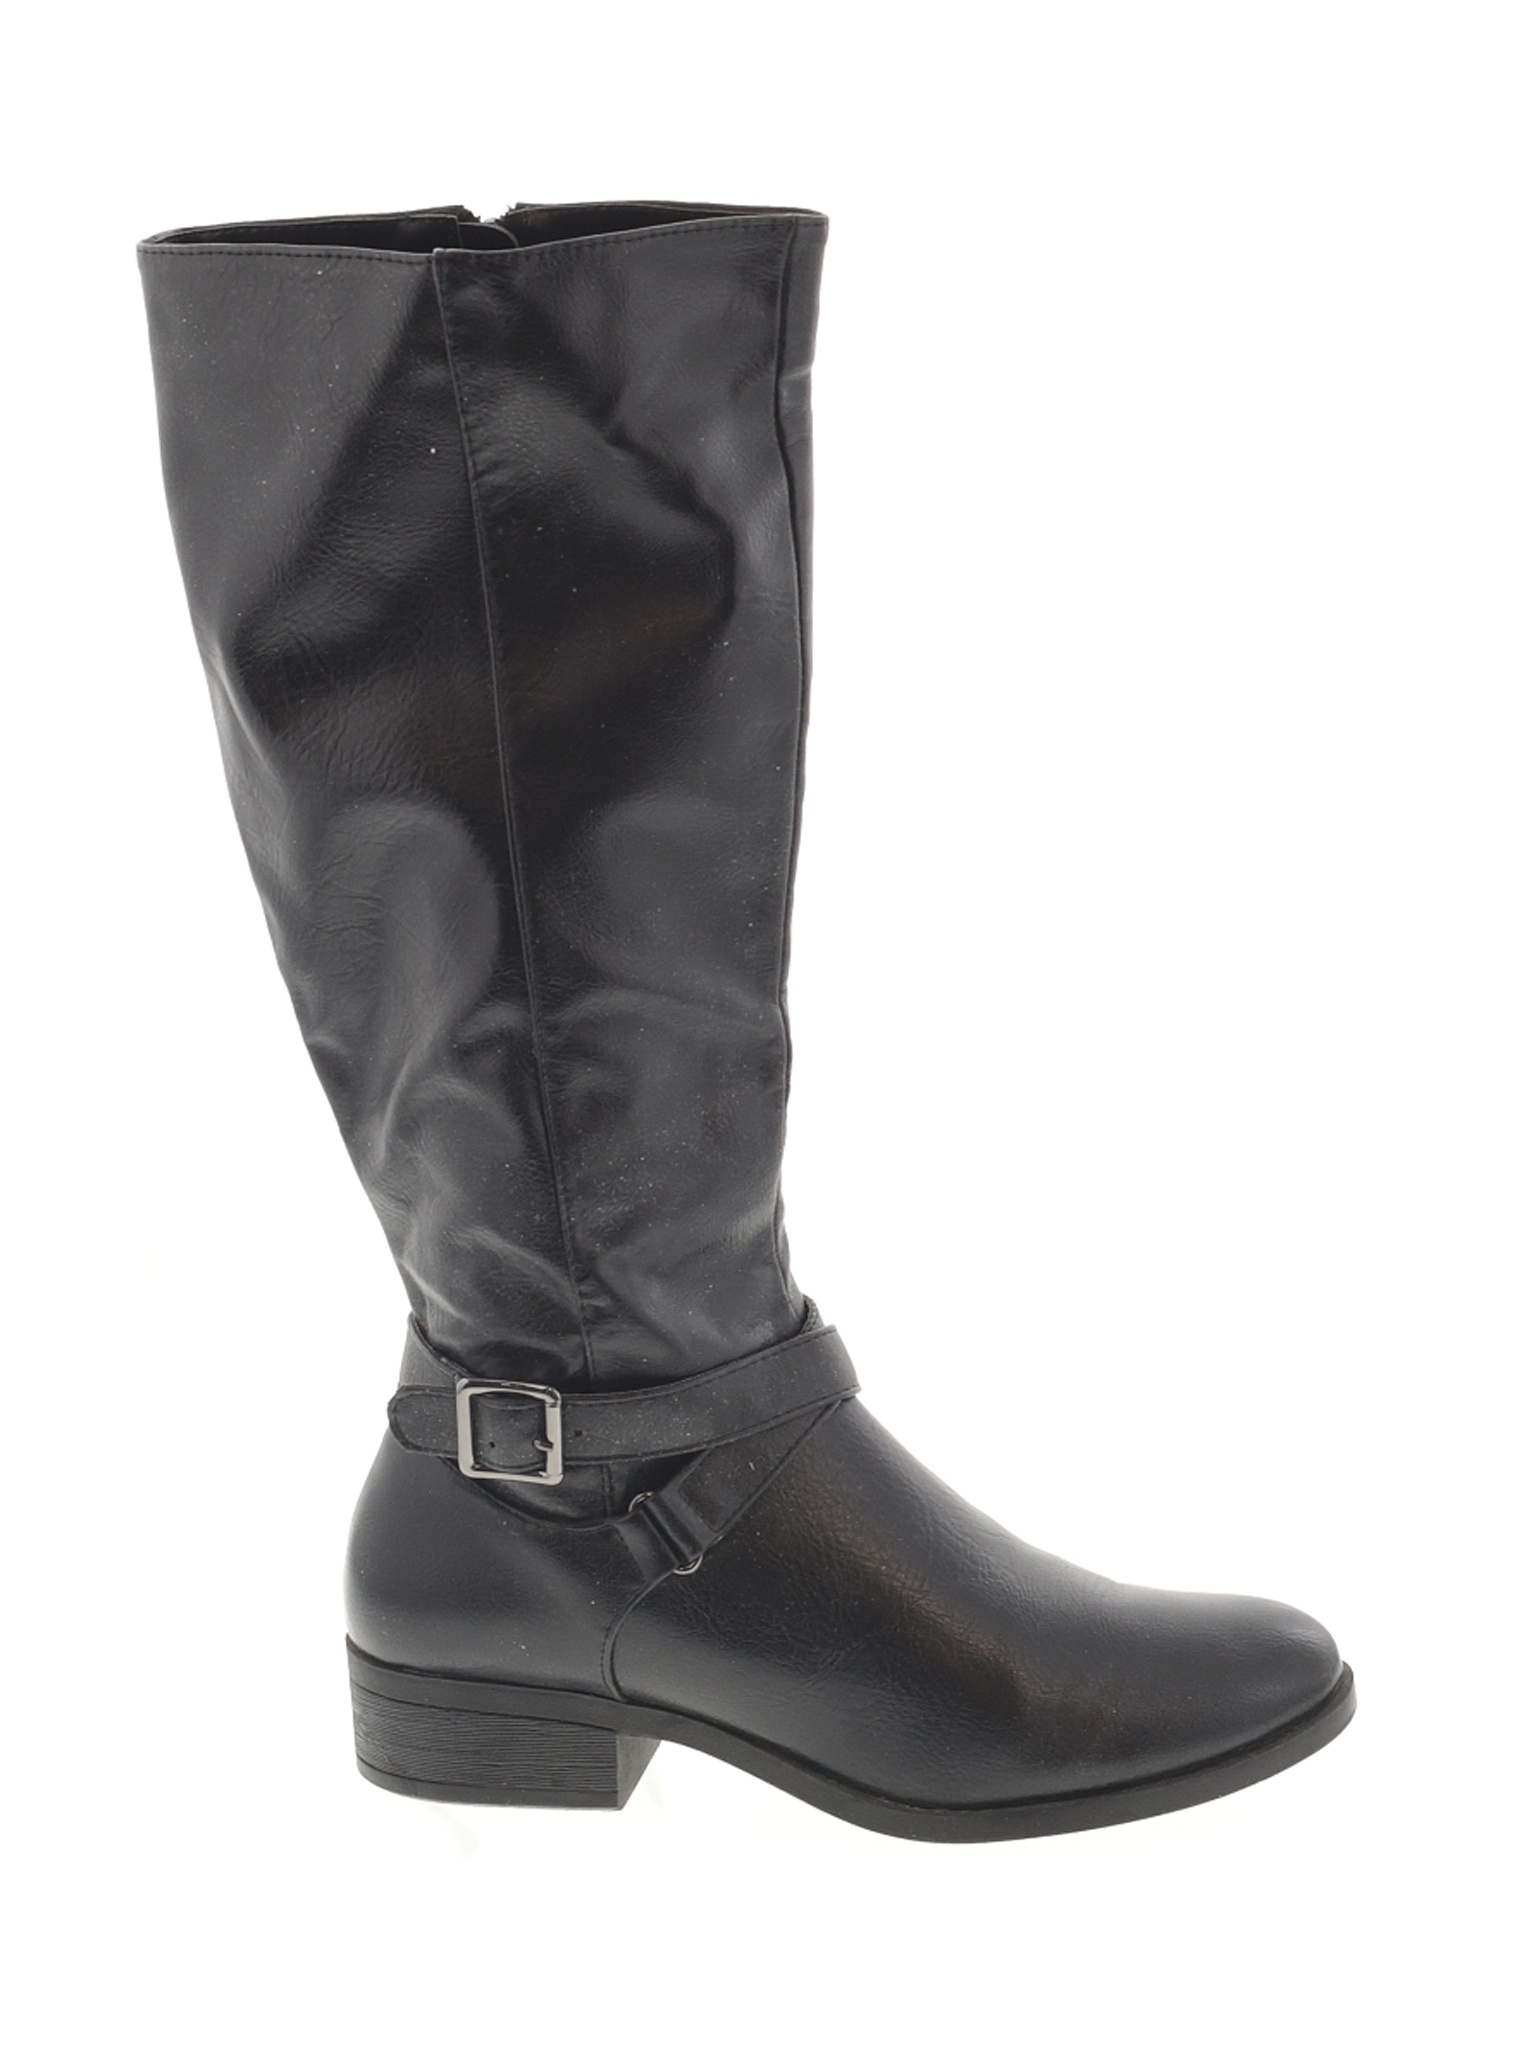 Croft & Barrow Women Black Boots US 9.5 | eBay